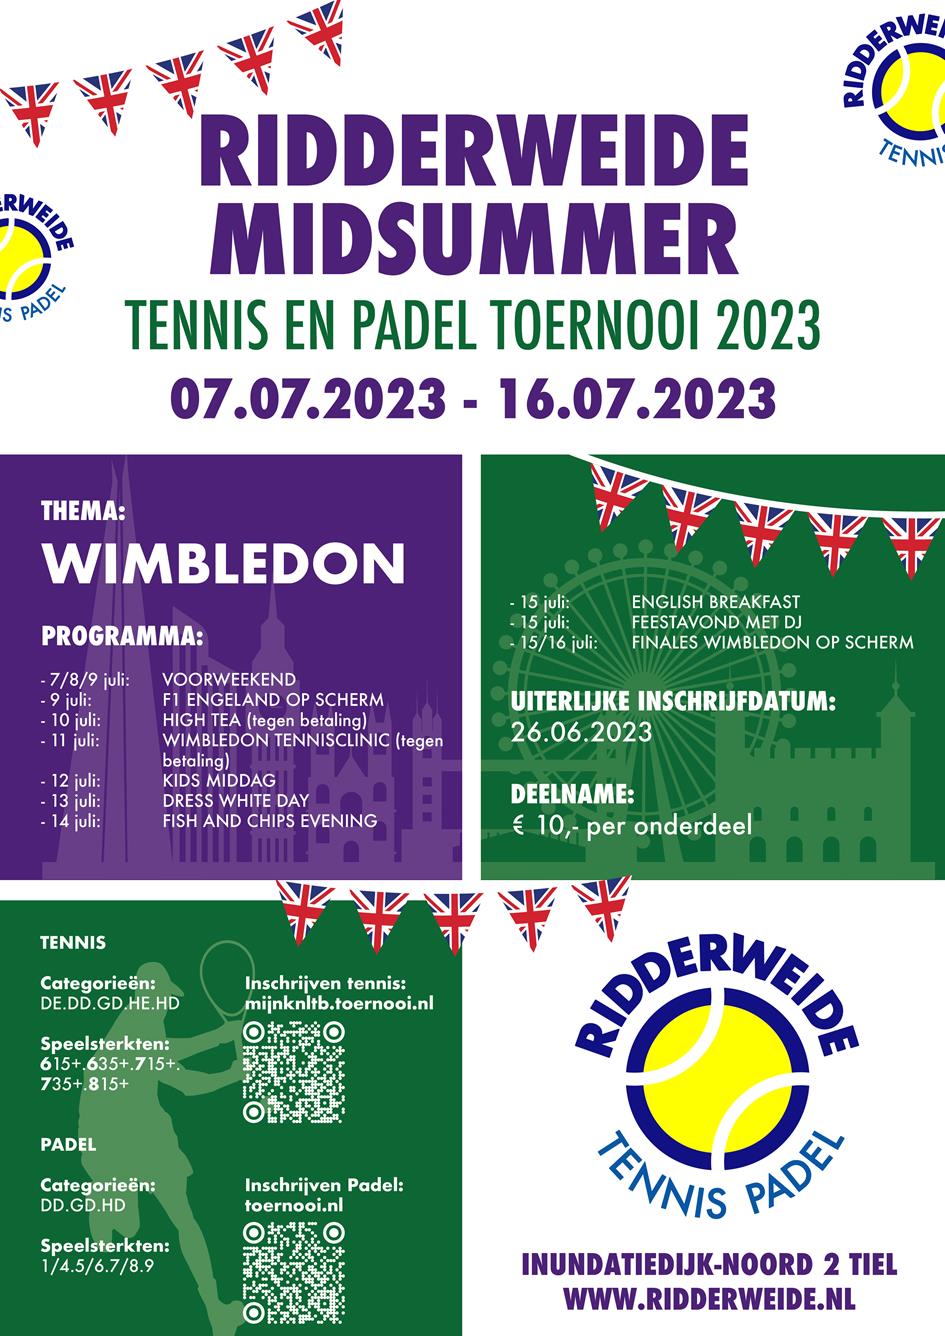 Ridderweide Midsummer Tennis en Padel 2023-02.jpg